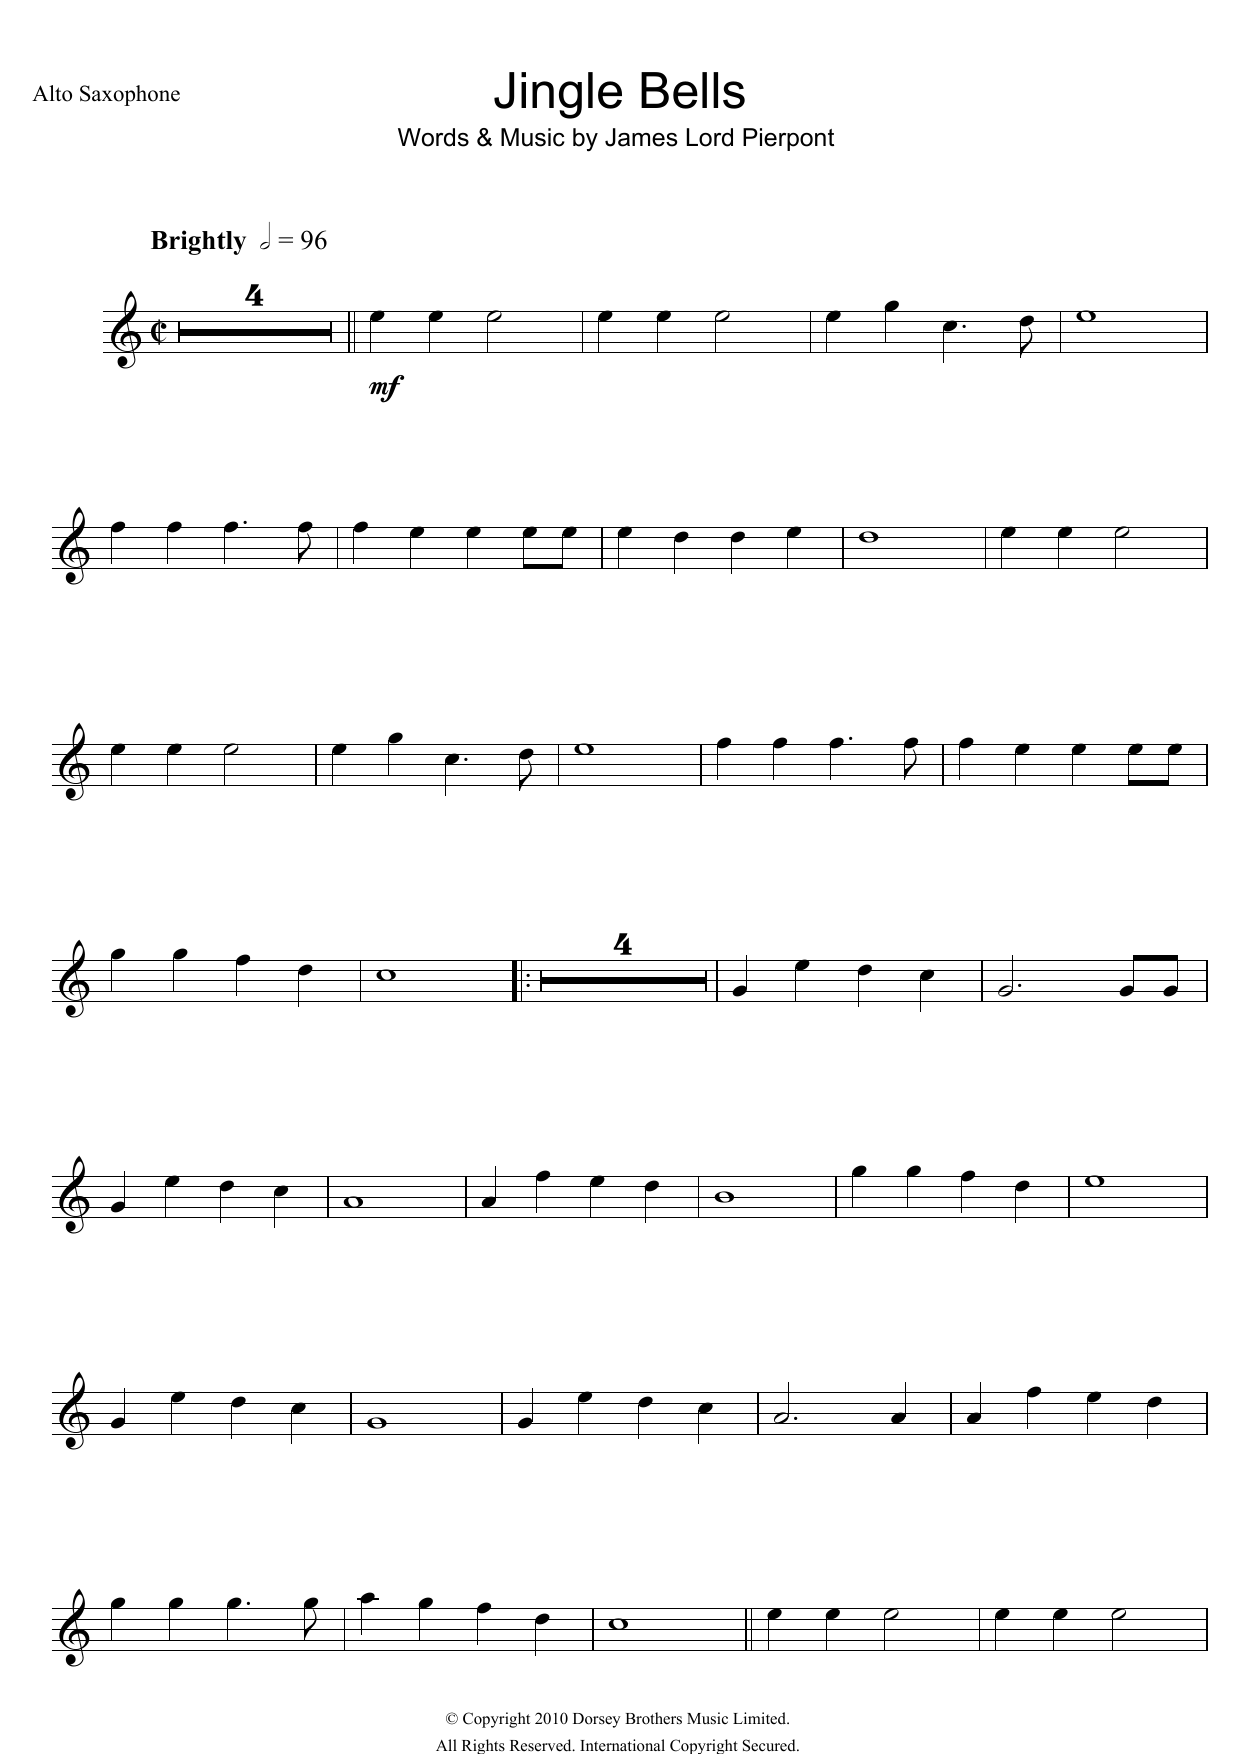 Traditional Carol Jingle Bells Sheet Music Notes & Chords for Alto Saxophone - Download or Print PDF